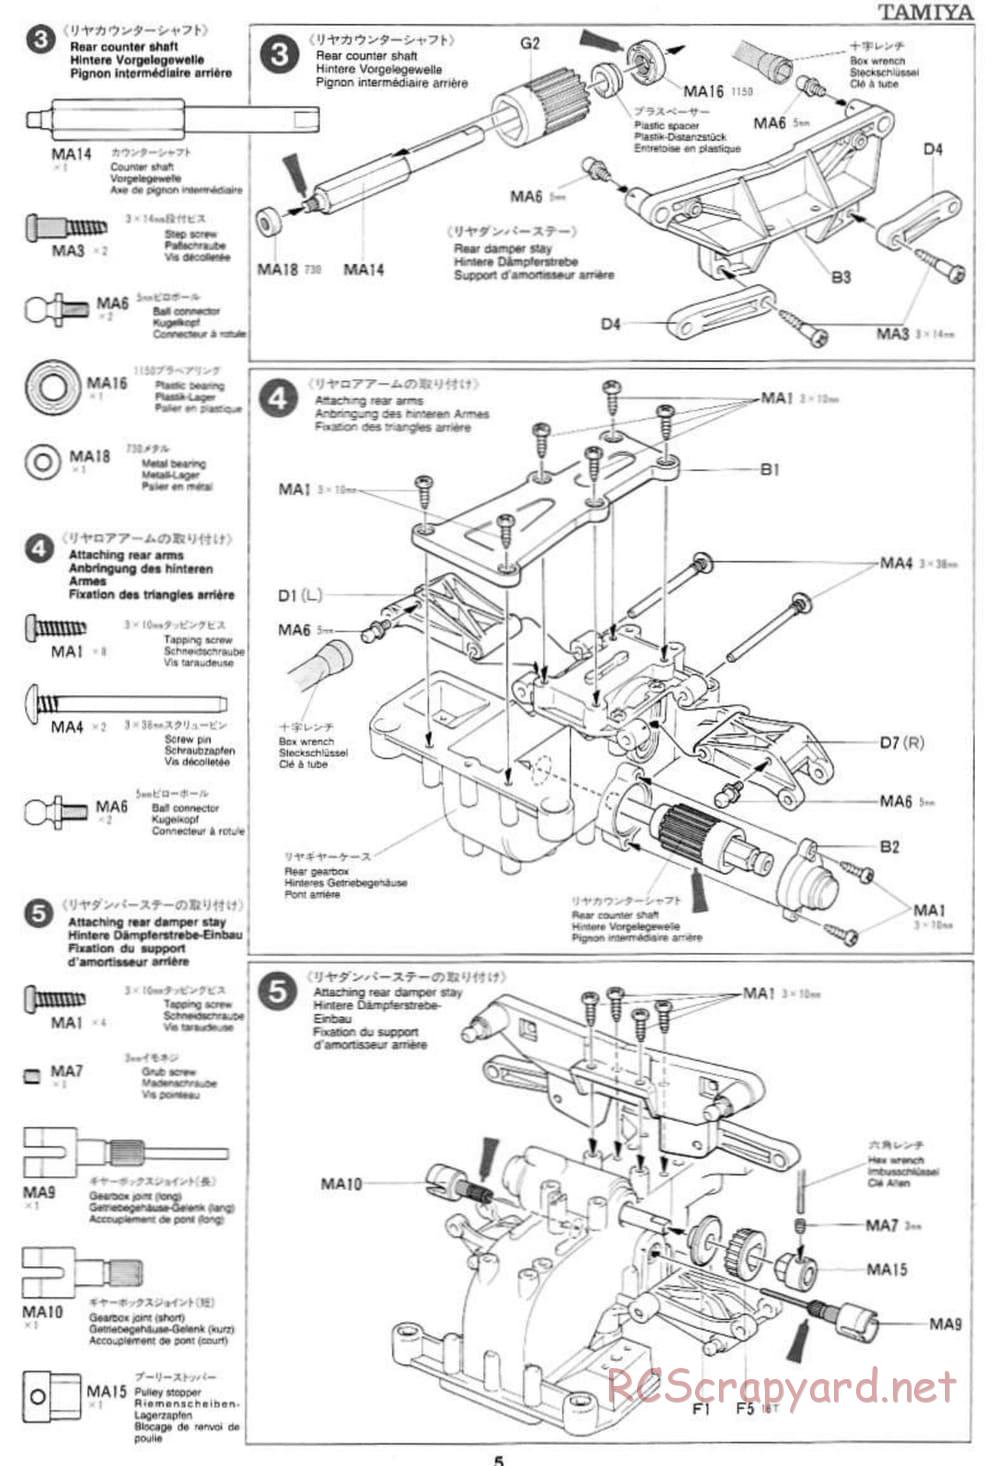 Tamiya - Toyota Corolla WRC - TA-03FS Chassis - Manual - Page 5